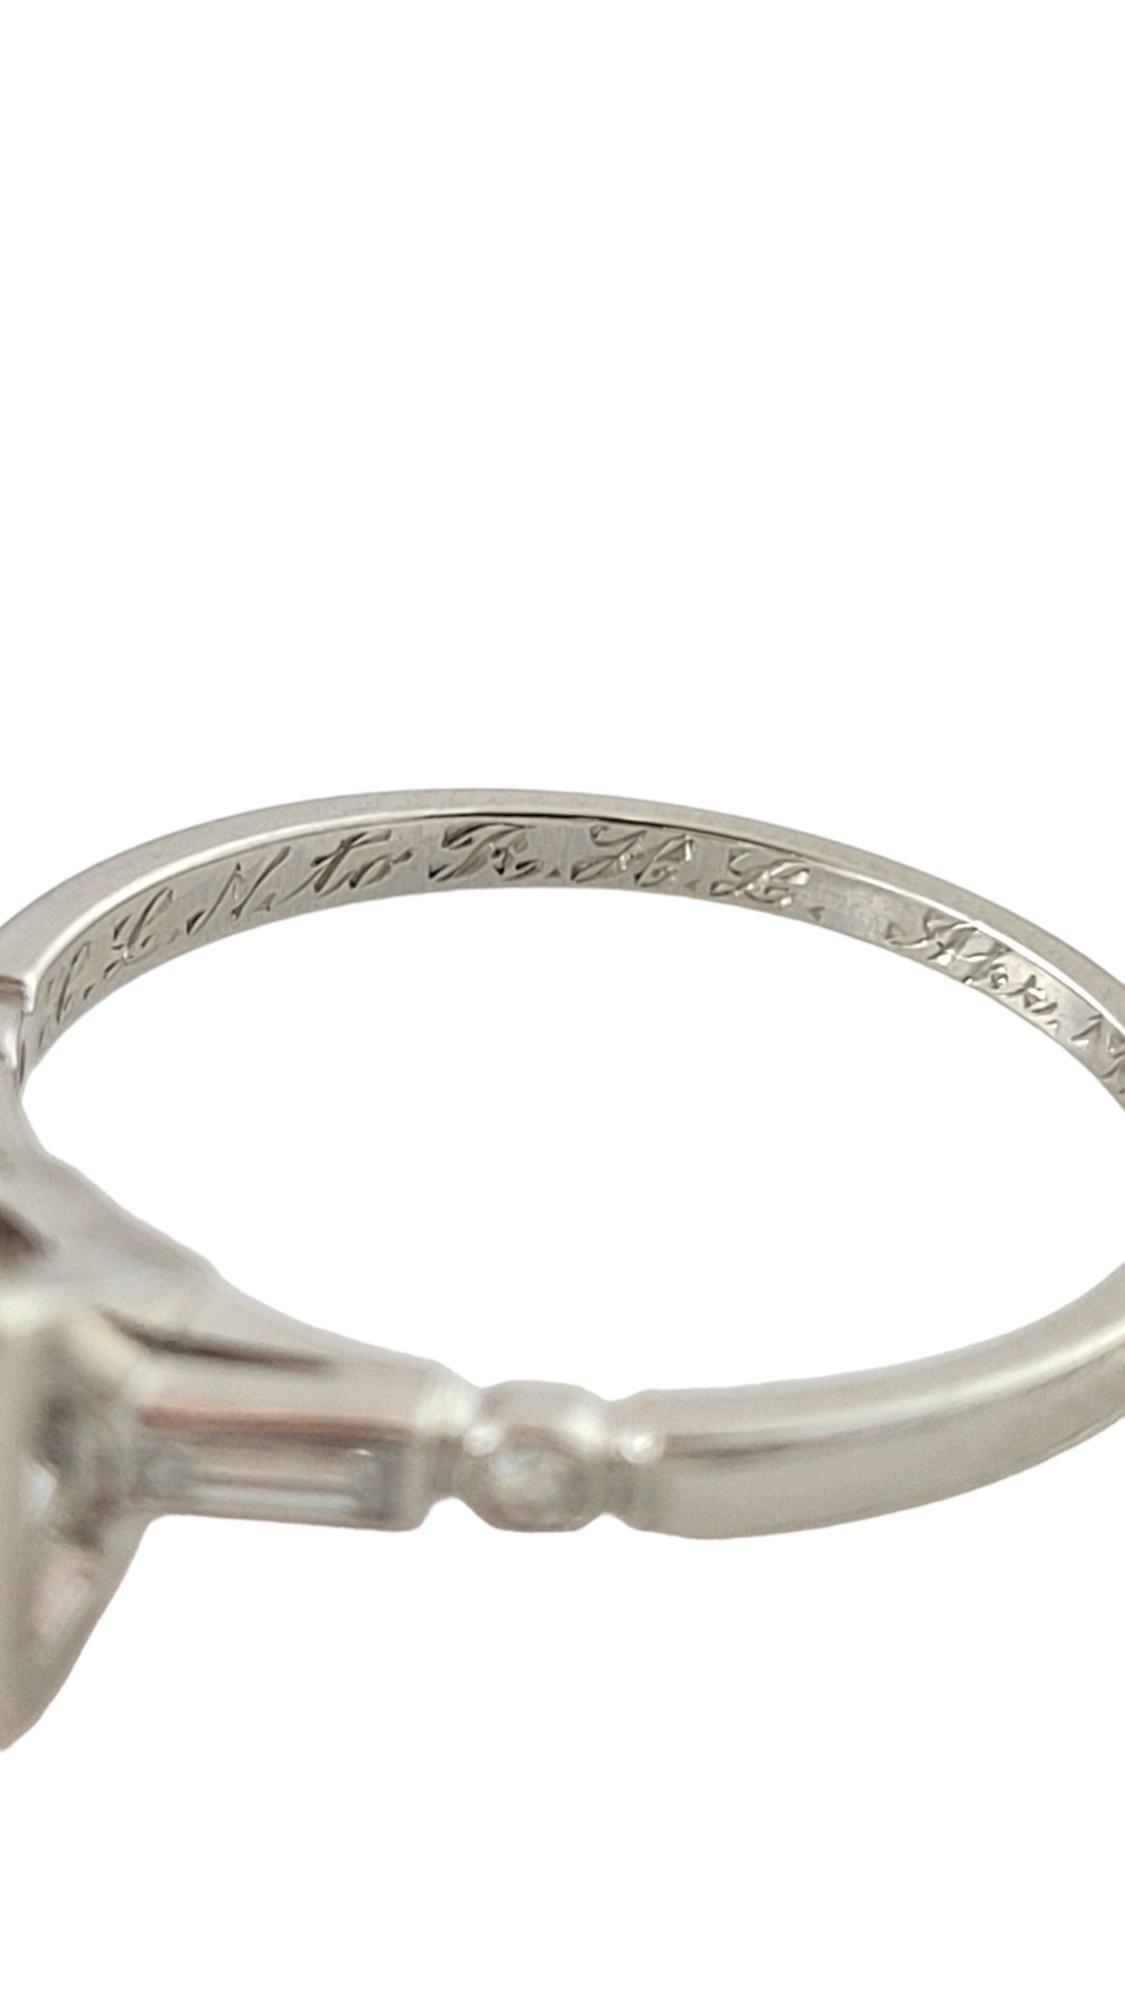 Vintage Platinum Old Cut Diamond Engagement Ring Size 6-6.25 #16929 For Sale 1